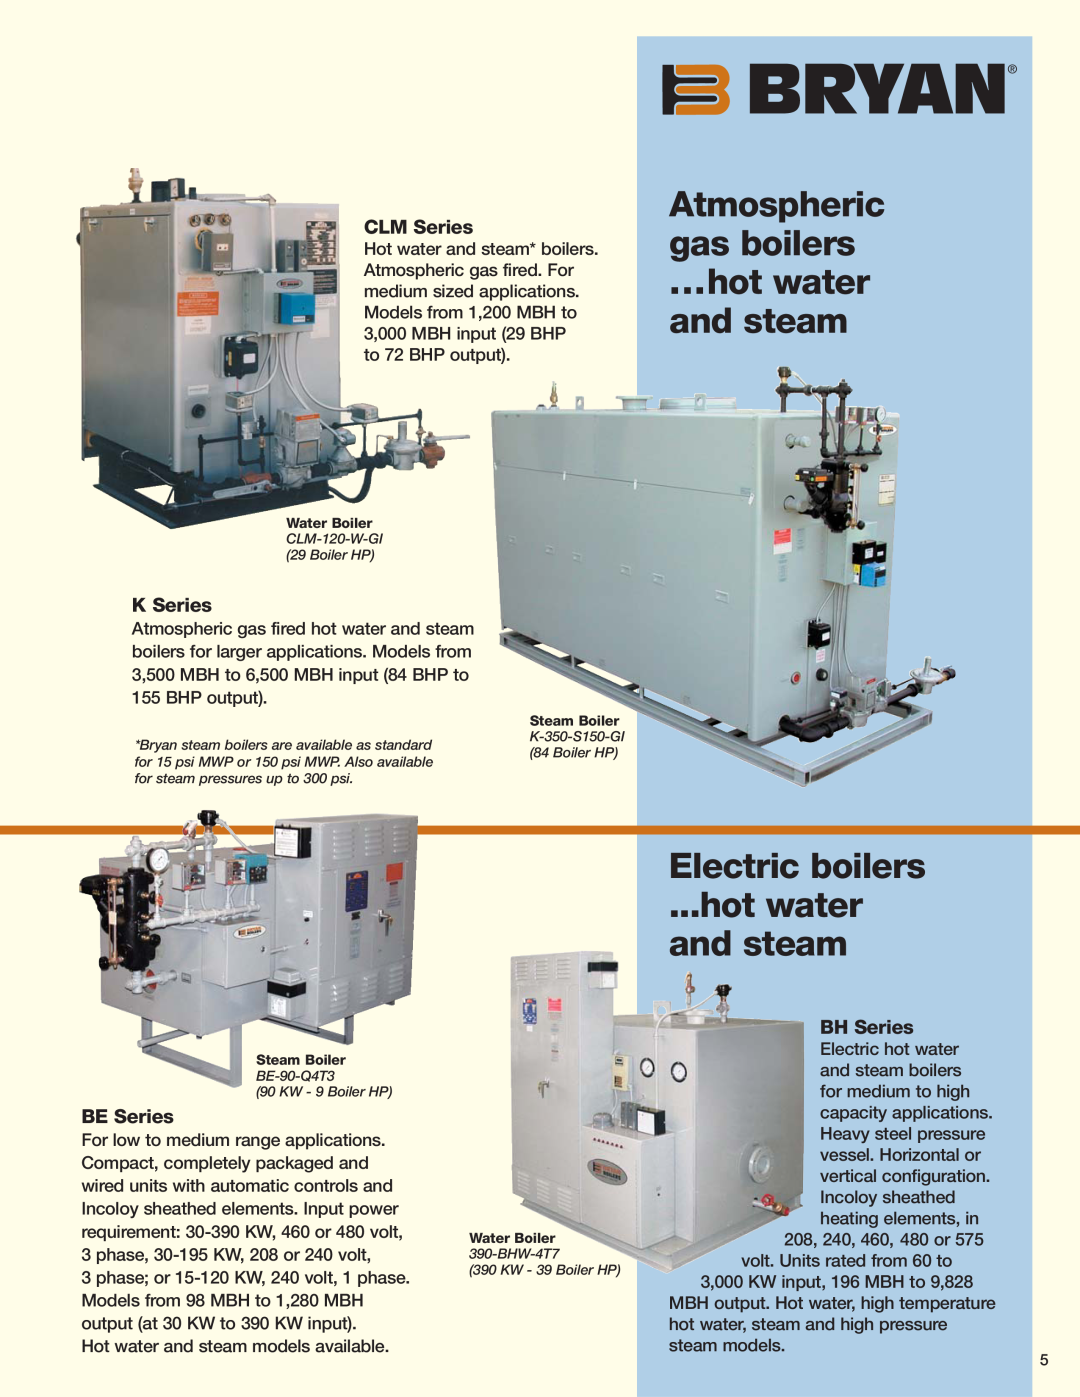 Bryan Boilers Flexible Water Tube Boilers Electric boilers hot water and steam, Atmospheric gas boilers, K Series 